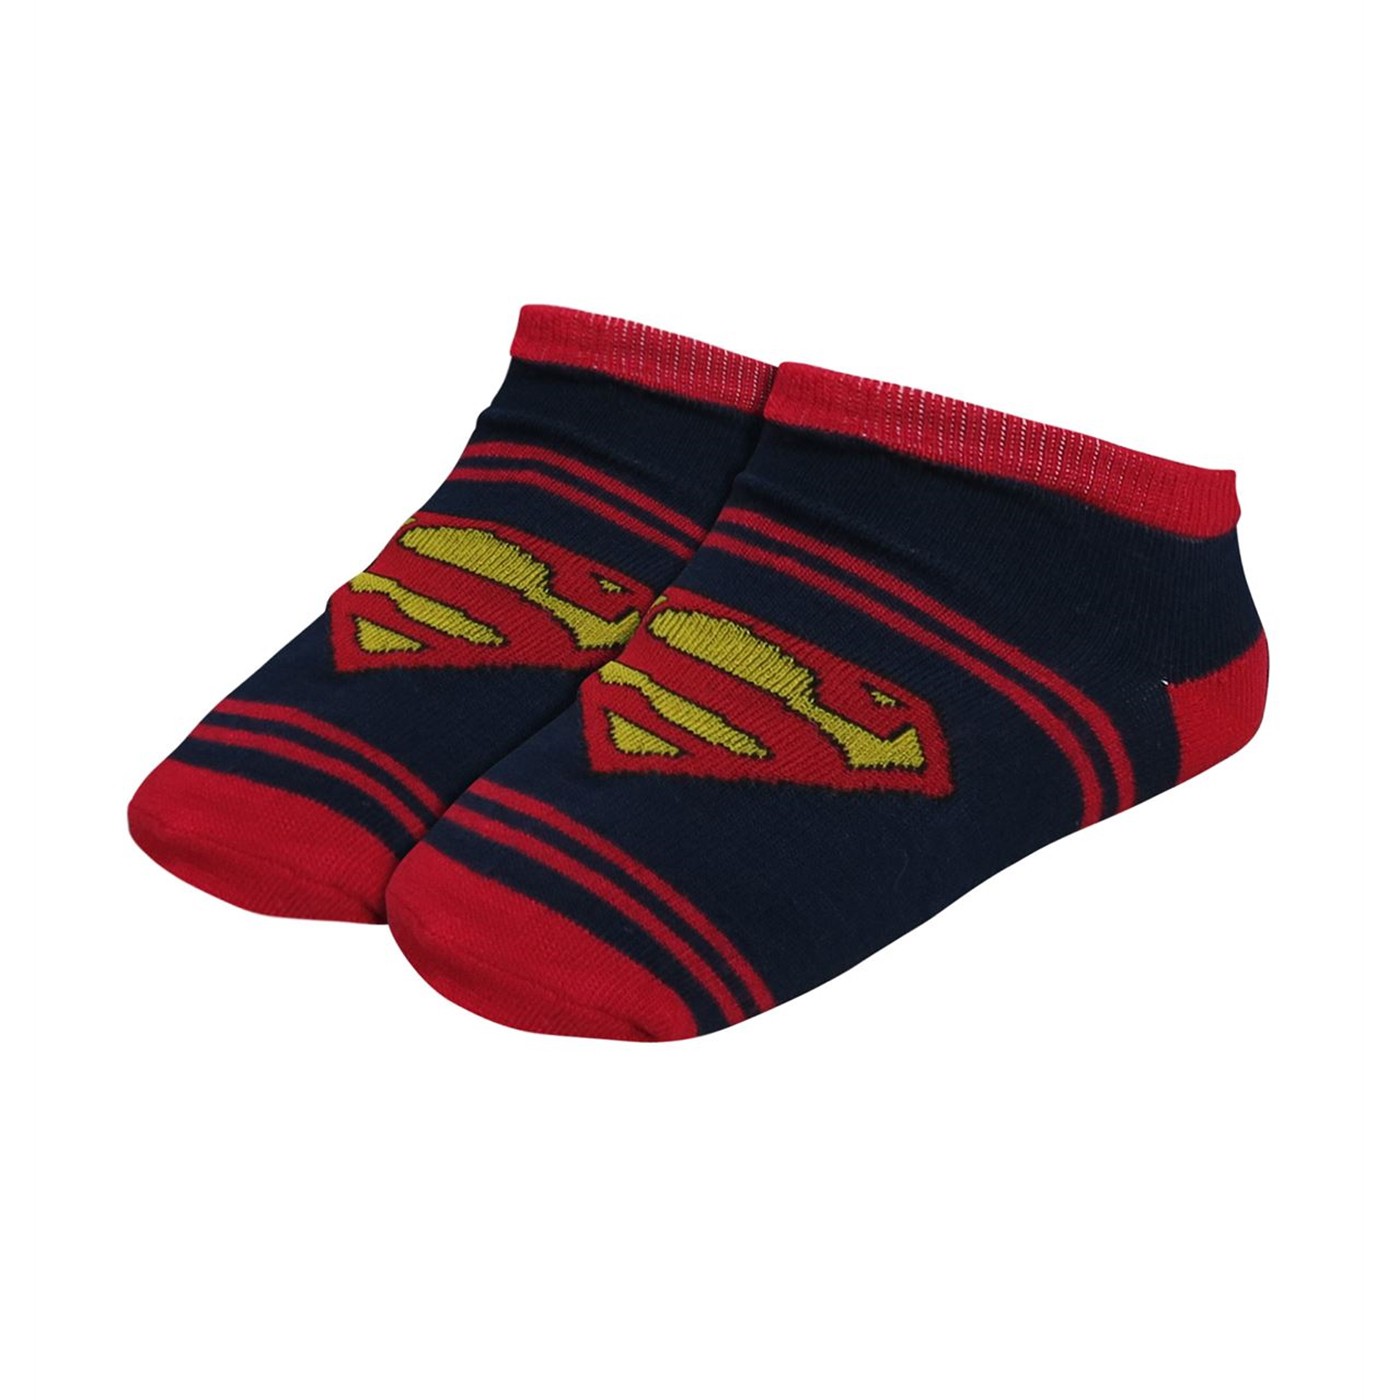 Superman Symbols Kids Sock 5 Pack